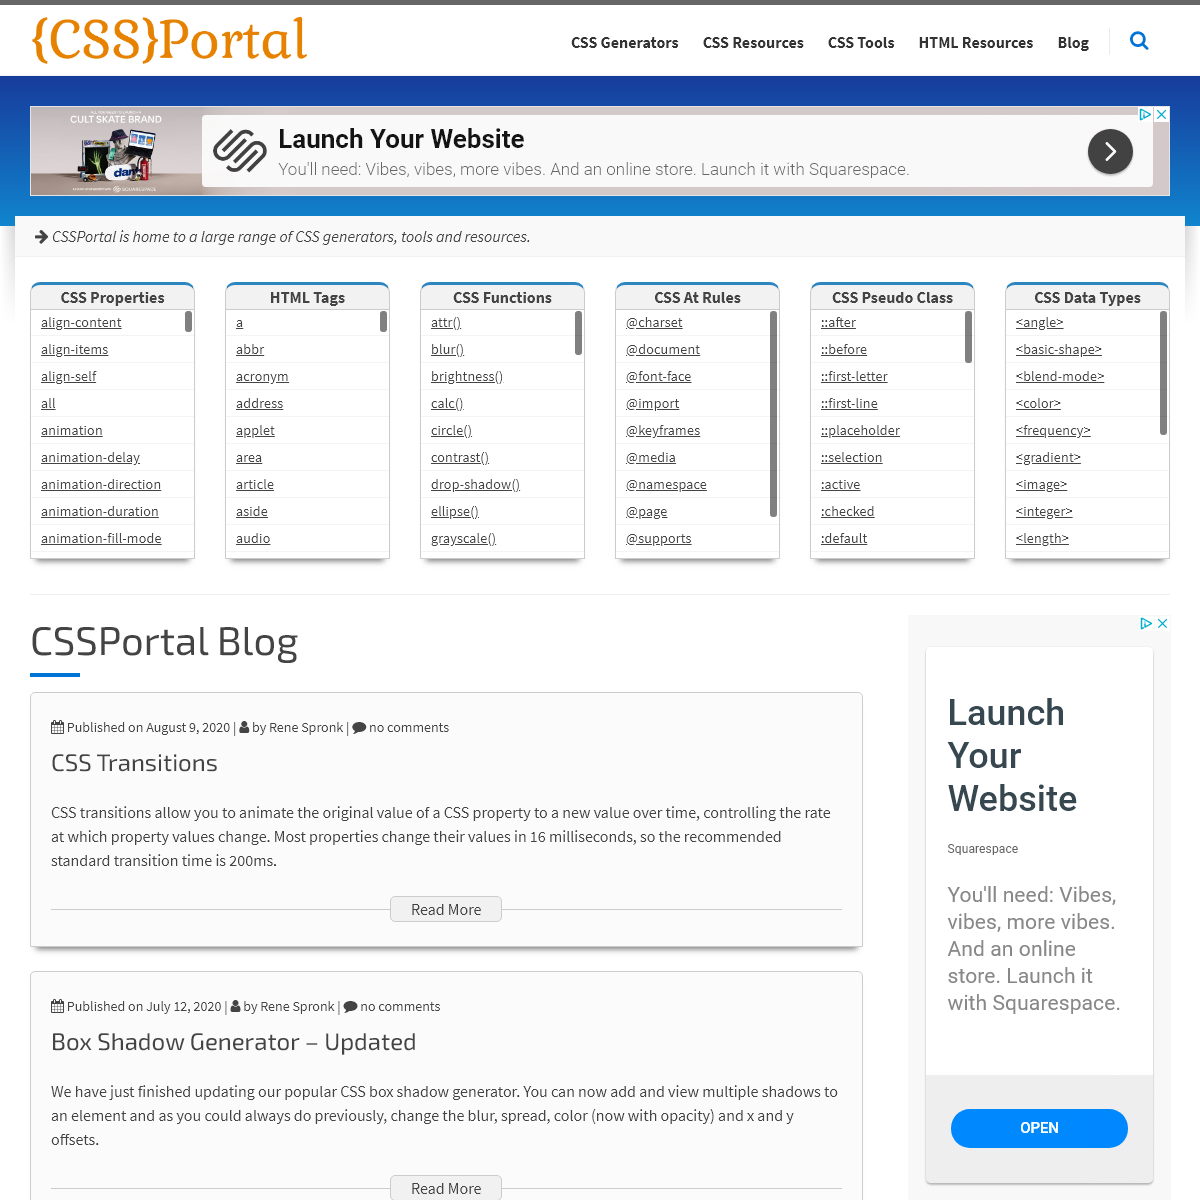 A complete backup of cssportal.com